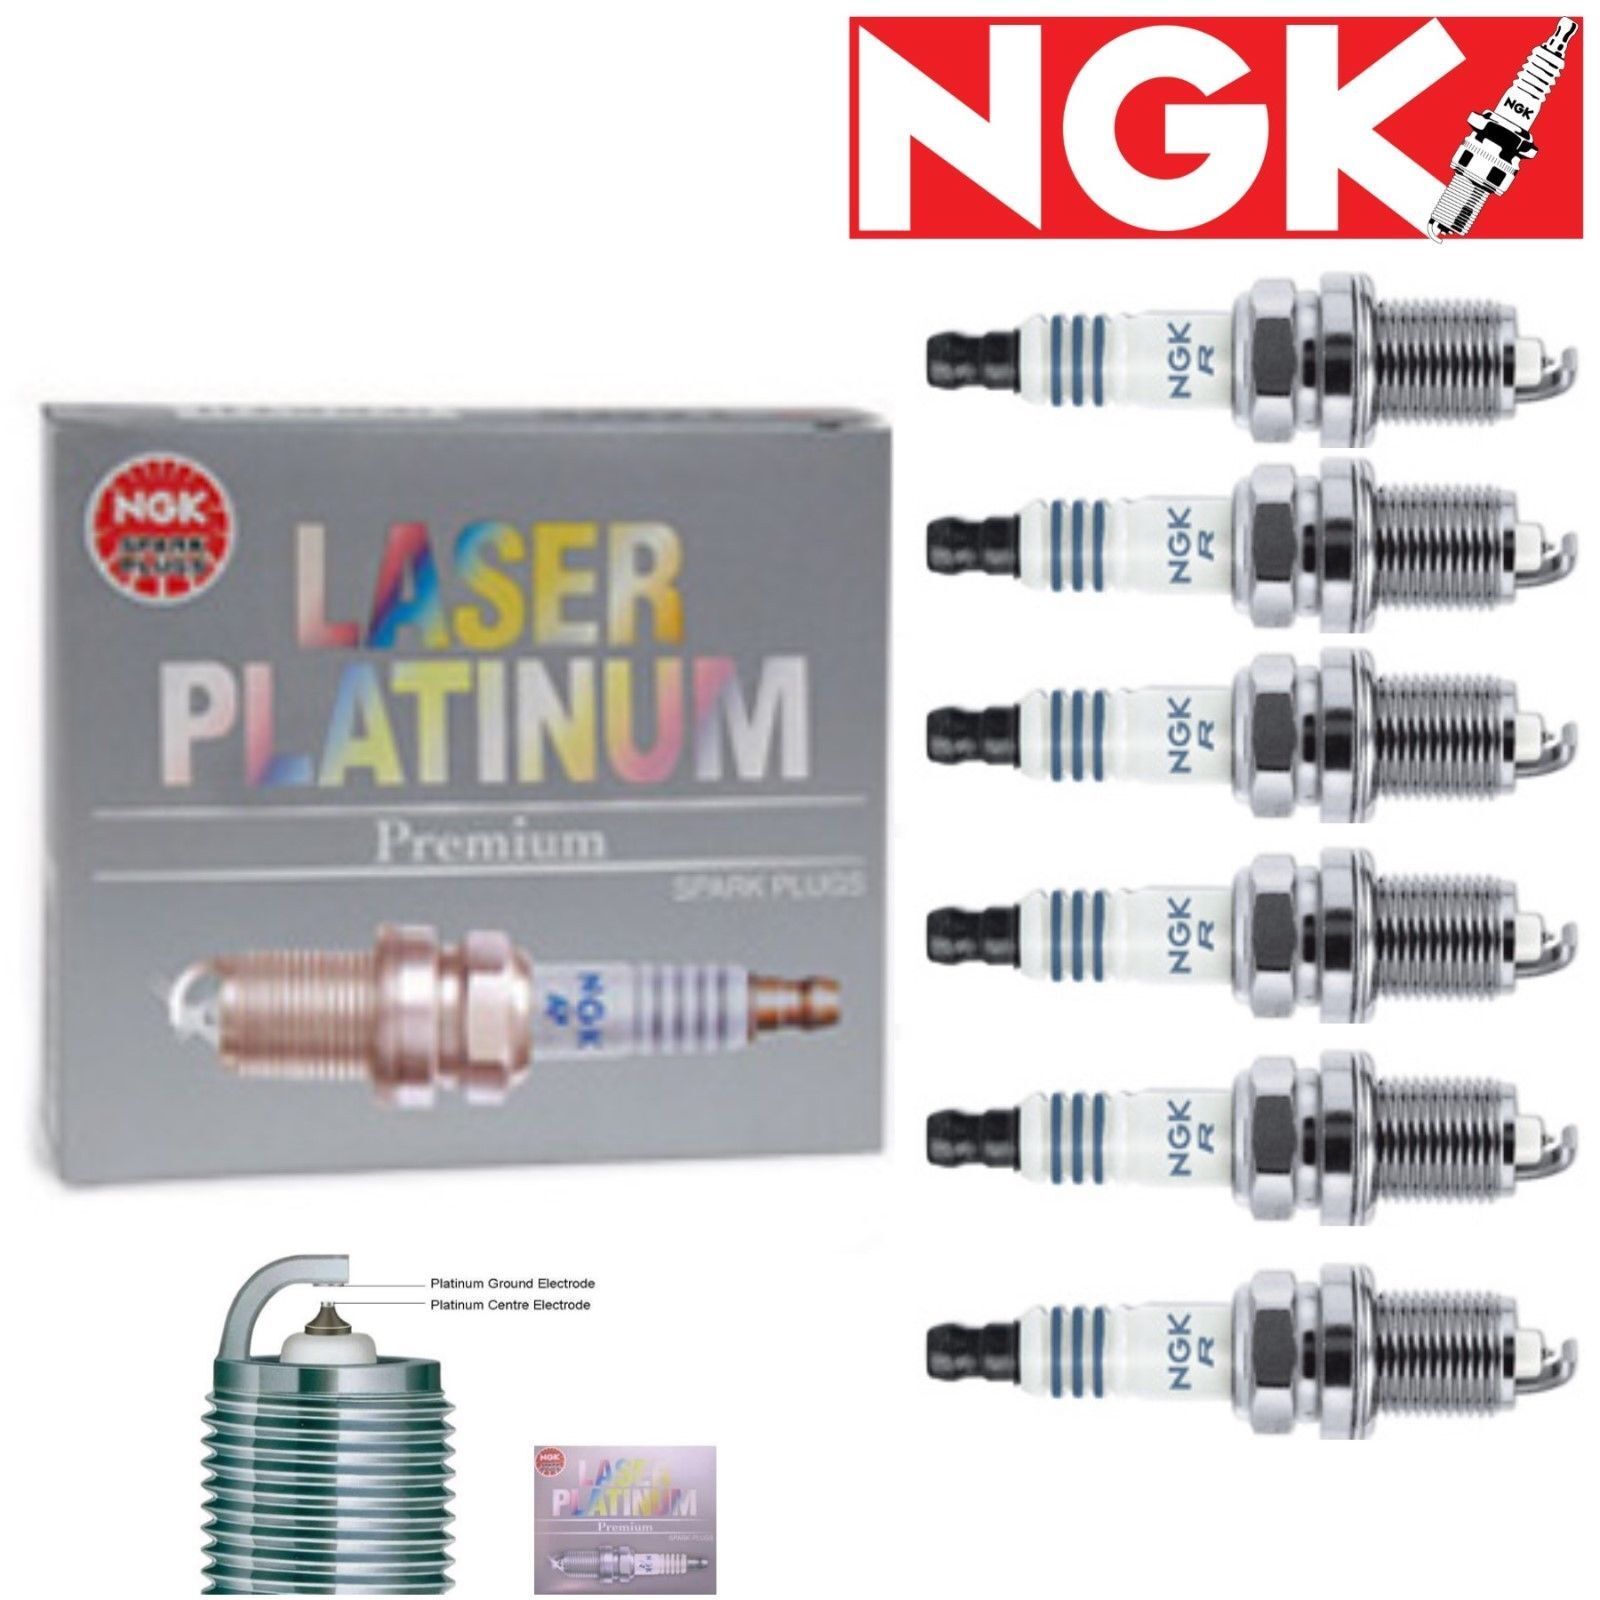 6 Pack NGK Laser Platinum Spark Plugs 1997-1999 Mitsubishi 3000GT 6G72-T